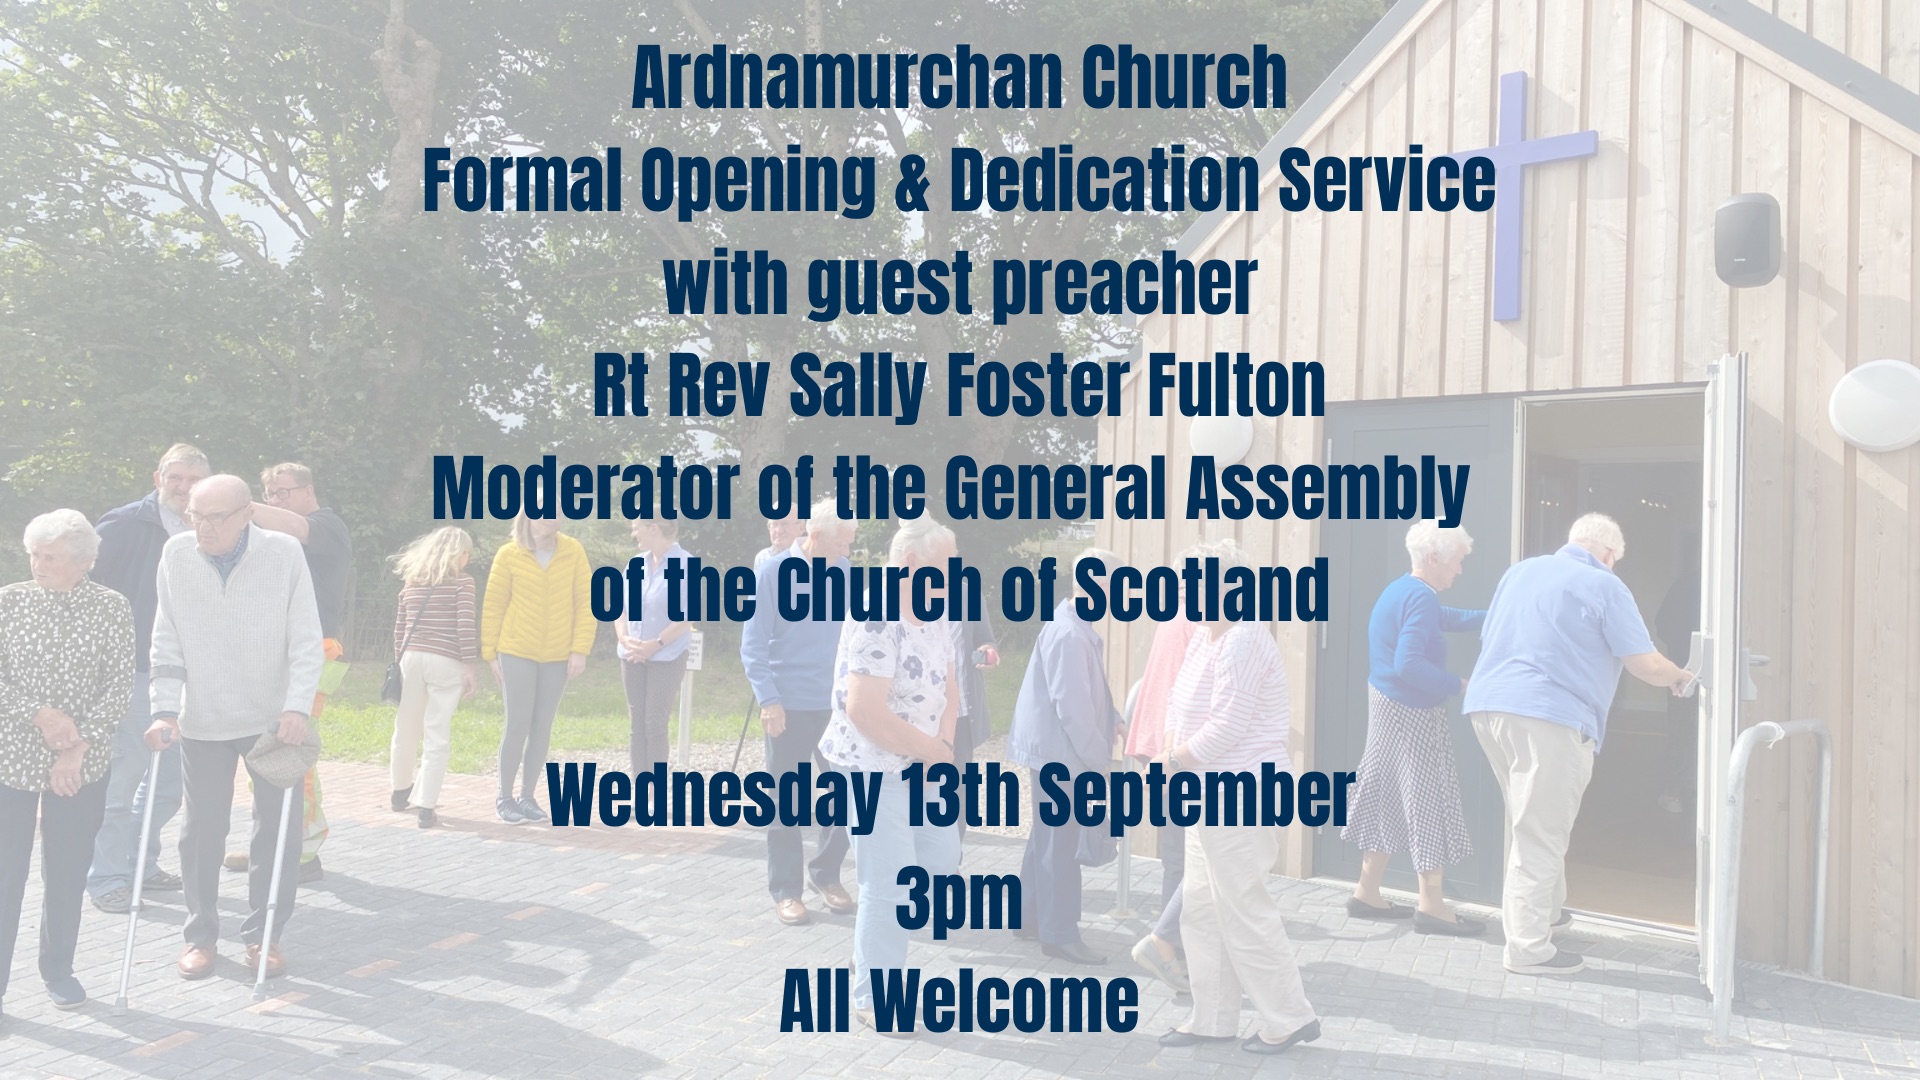 Wed 13th September at Ardnamurchan Church, Kilchoan